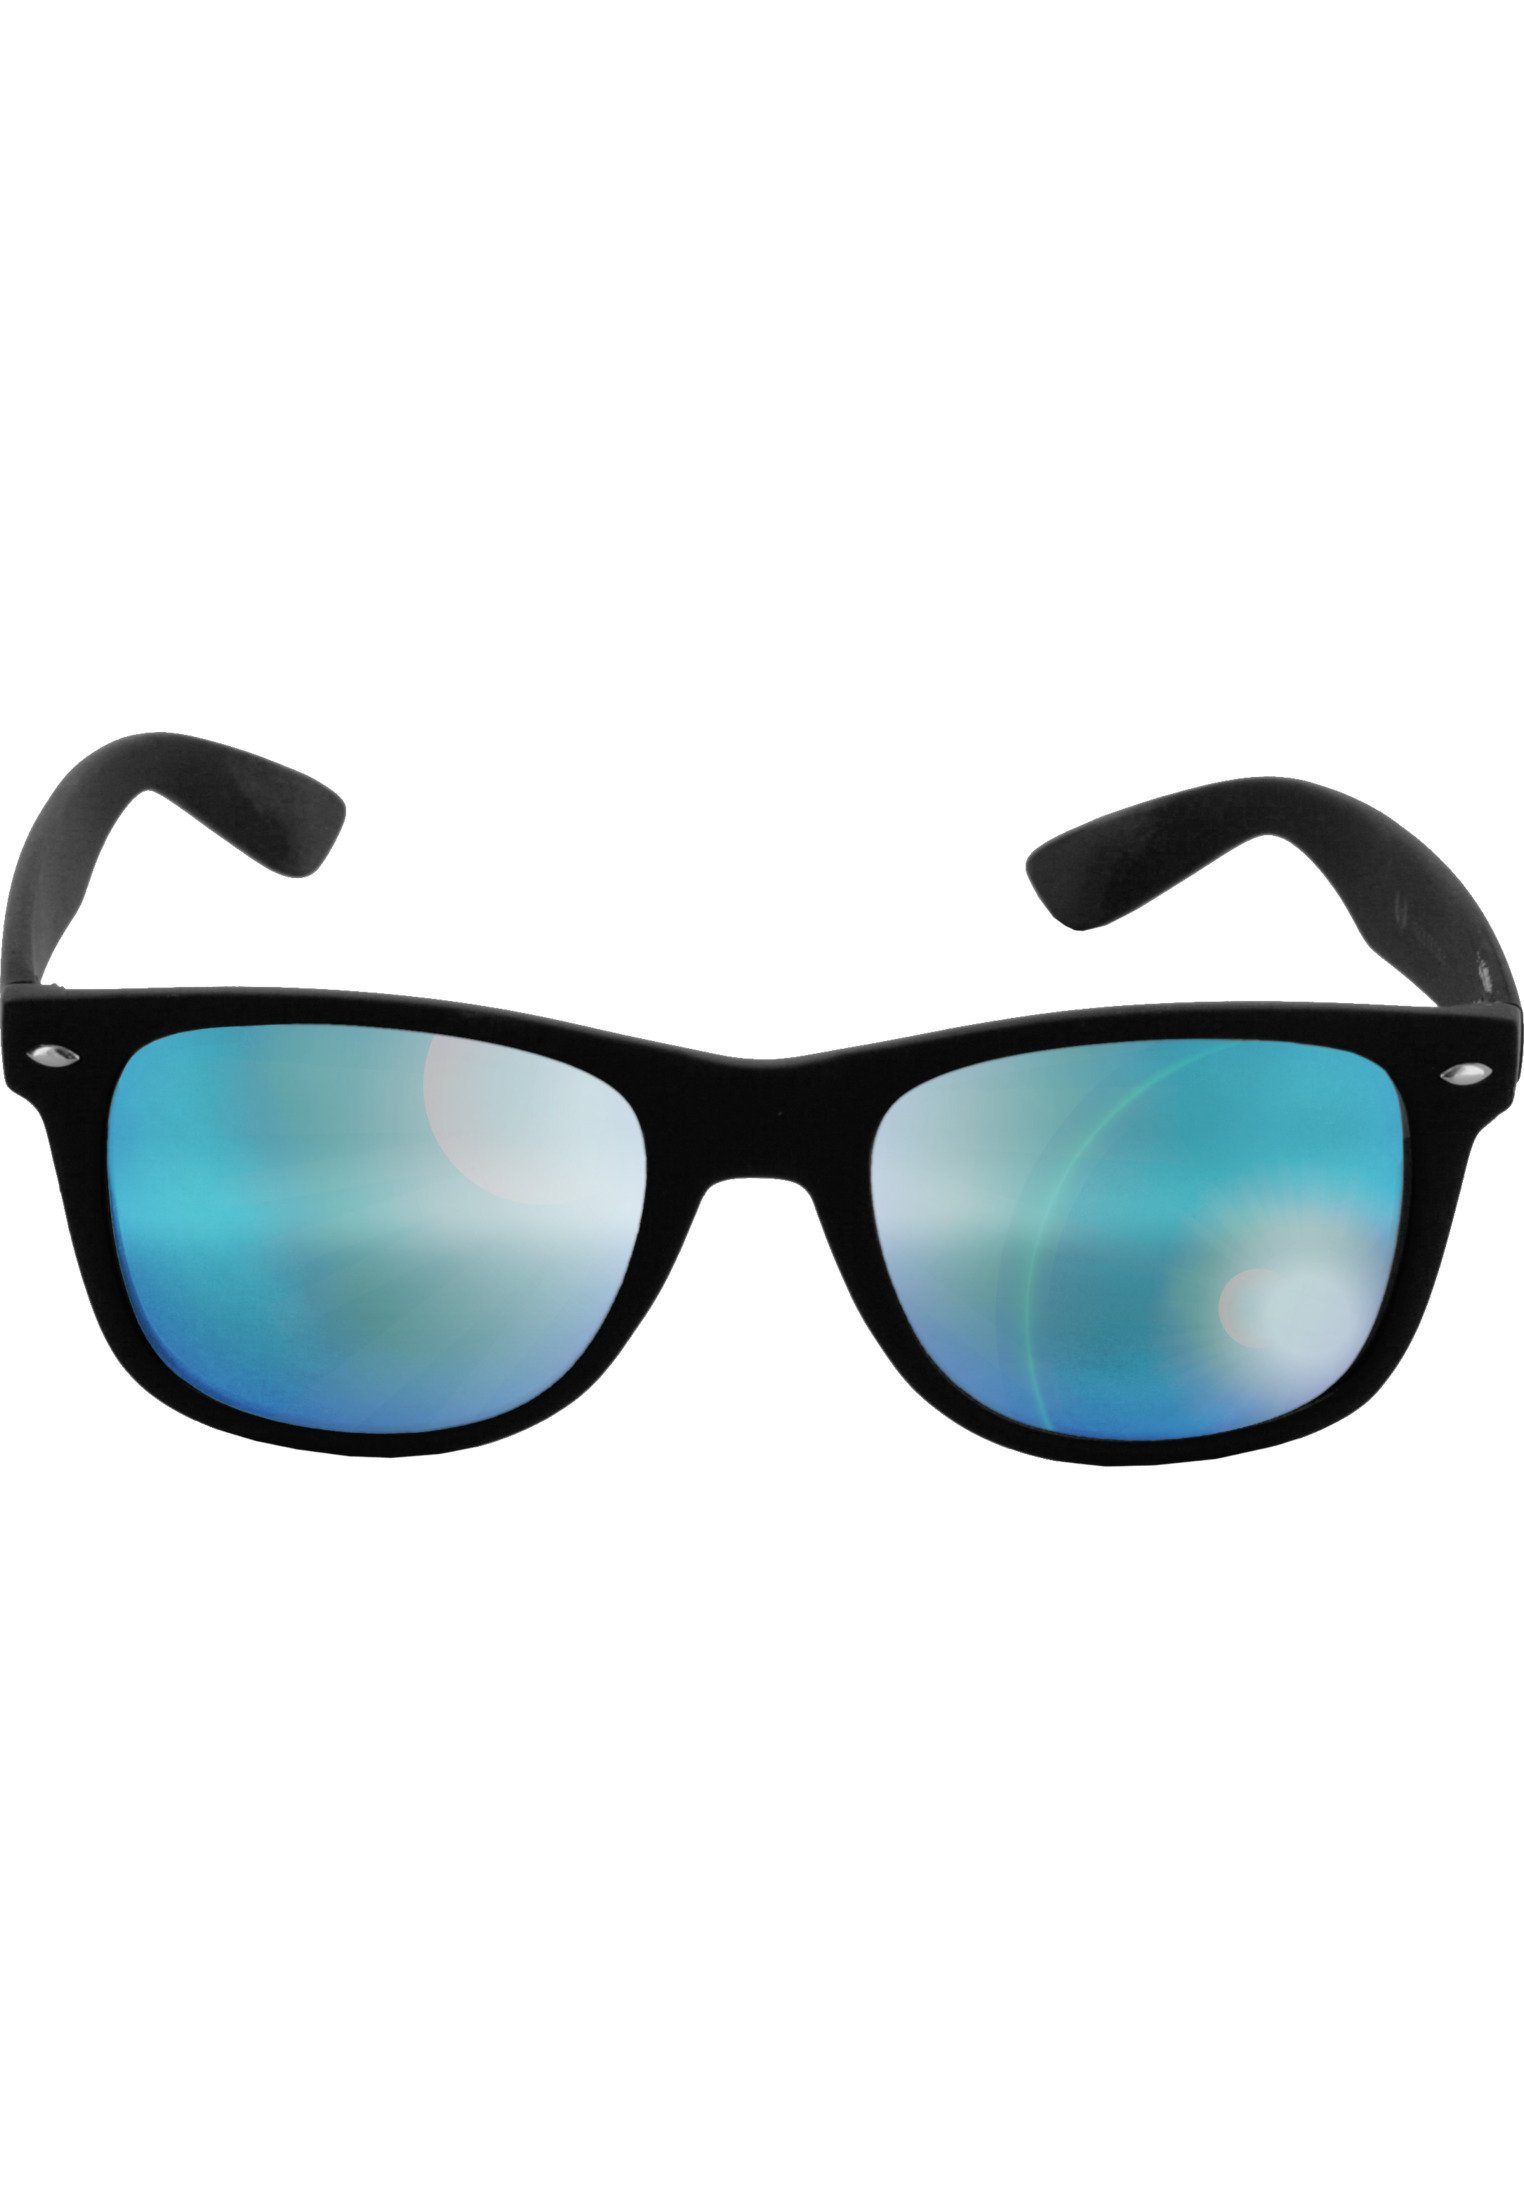 Likoma Accessoires MSTRDS blk/blue Sonnenbrille Sunglasses Mirror